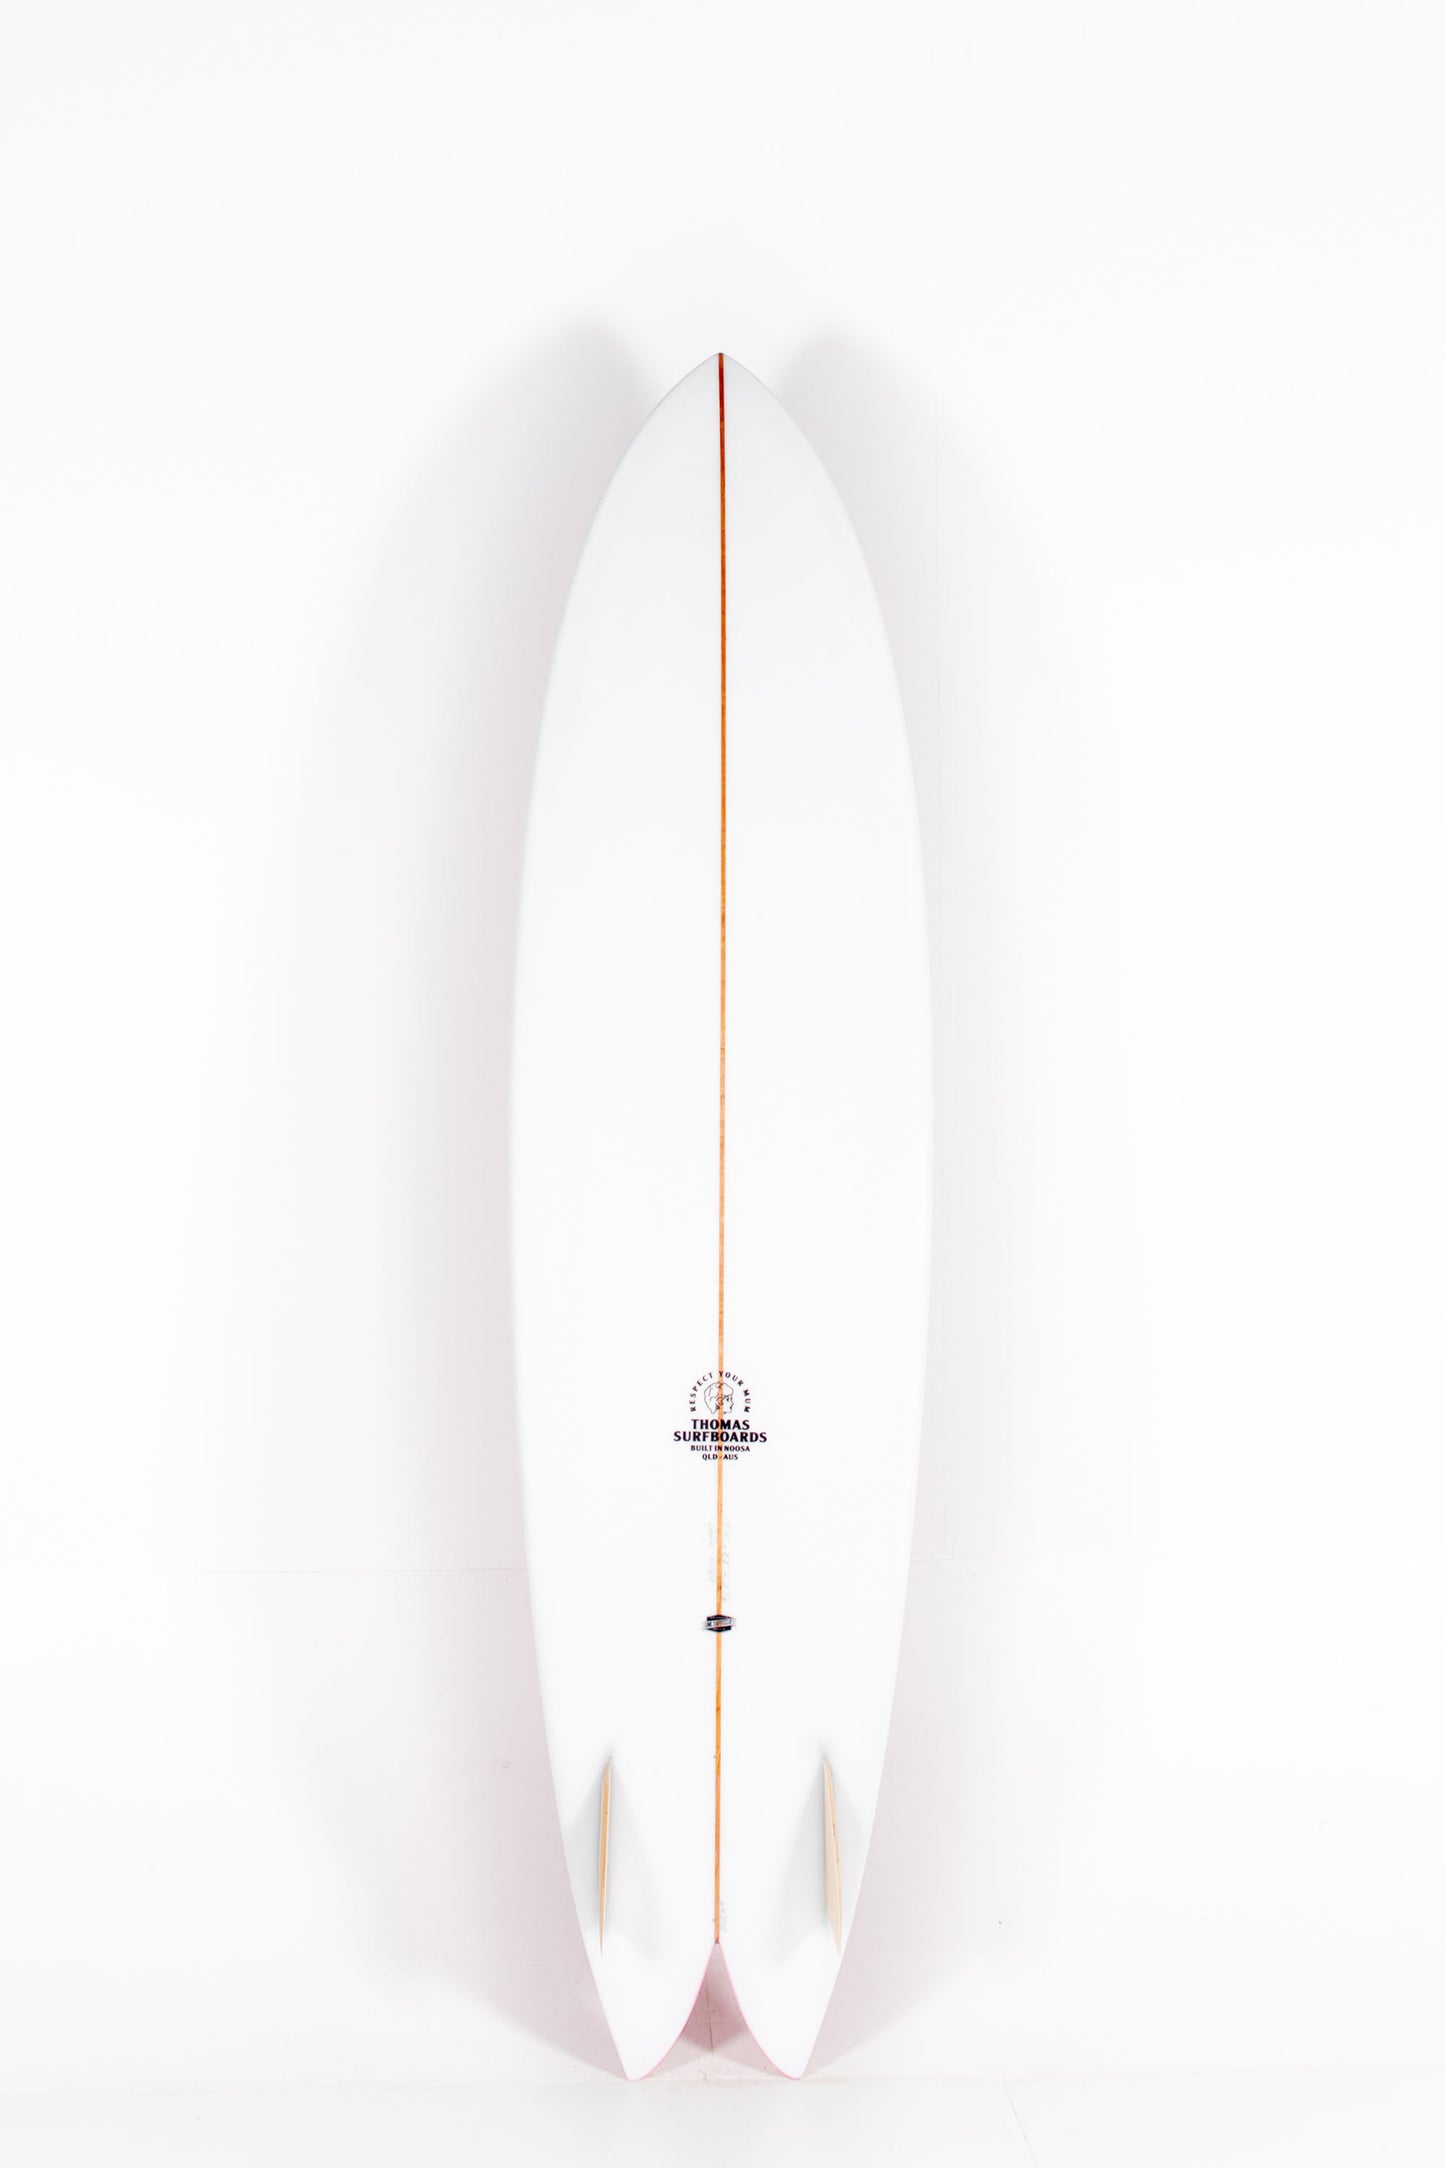 Pukas Surf Shop - Thomas Surfboards - LONG FISH - 7'6"x 22 x 2 7/8 - Ref. LONGFISH76